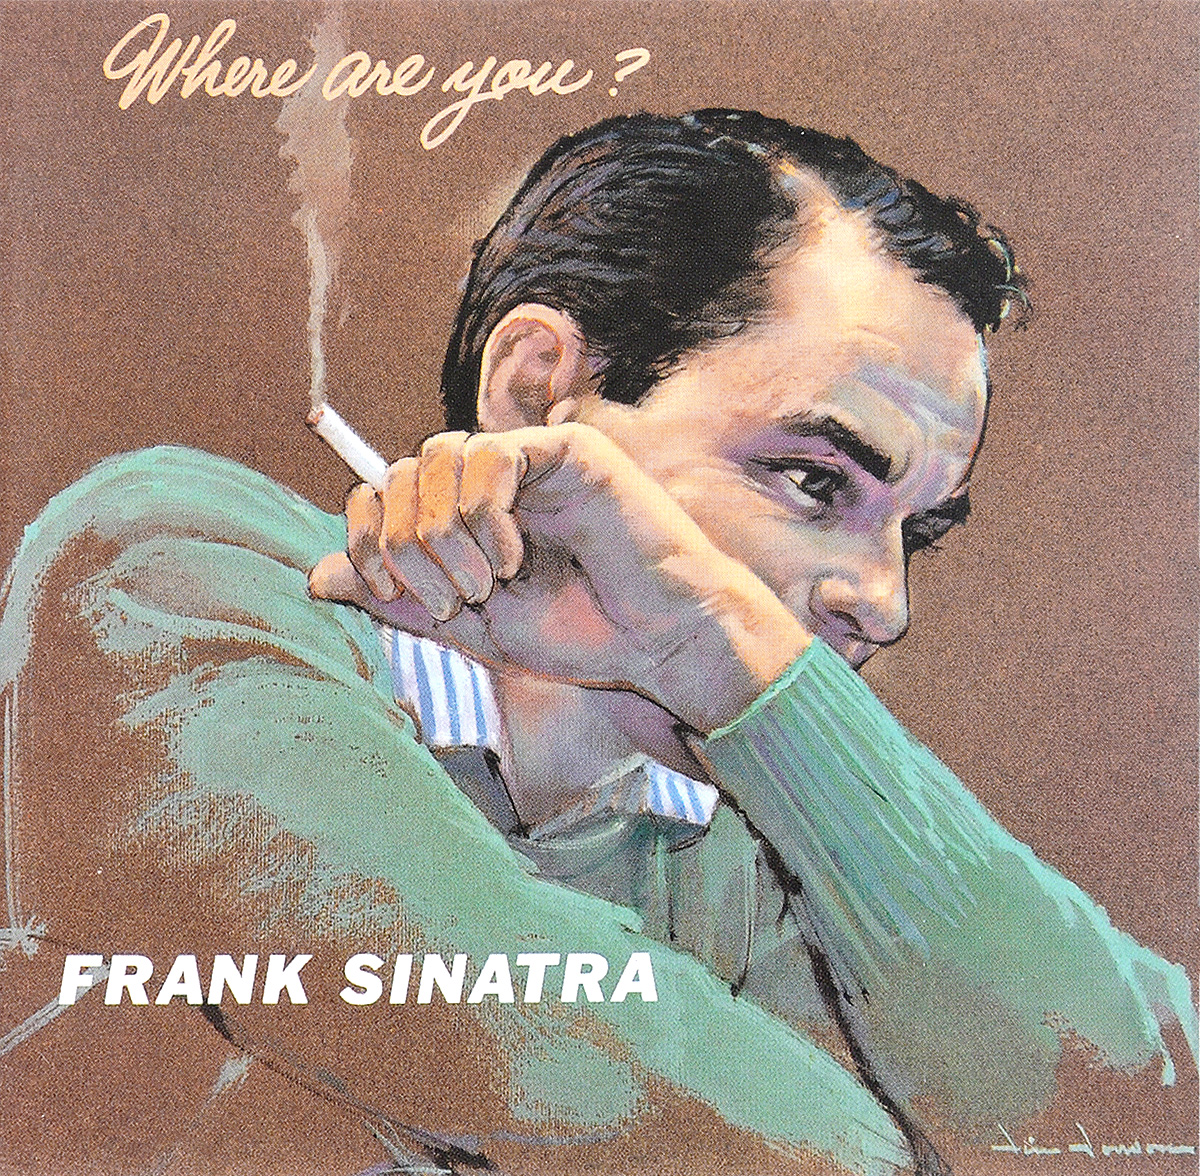 Frank Sinatra. Where Are You?